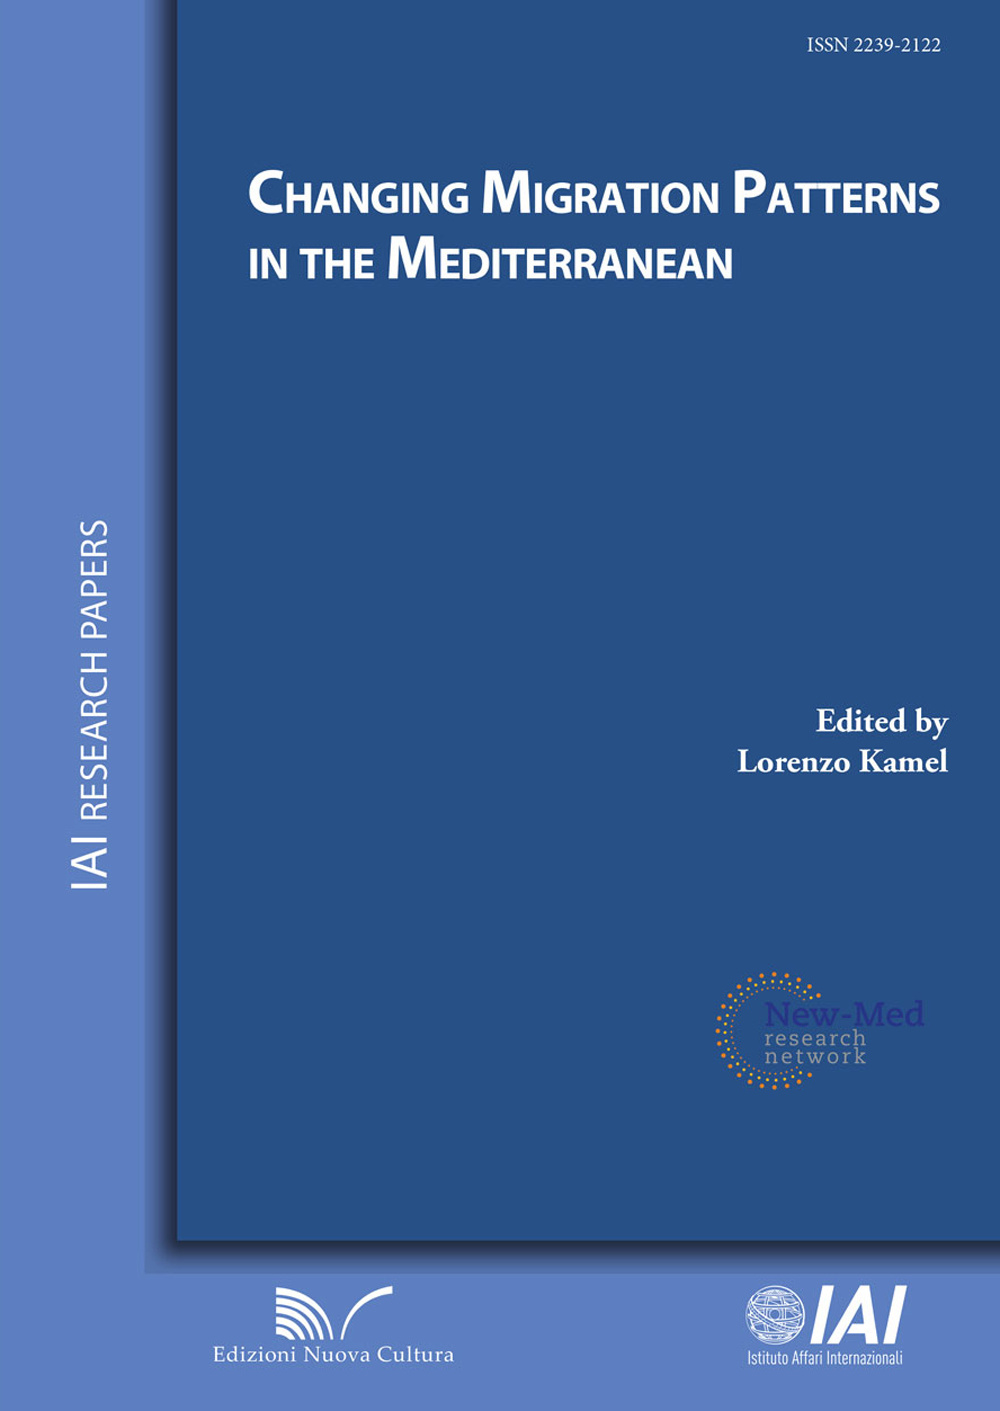 Changing migration patterns in the Mediterranean